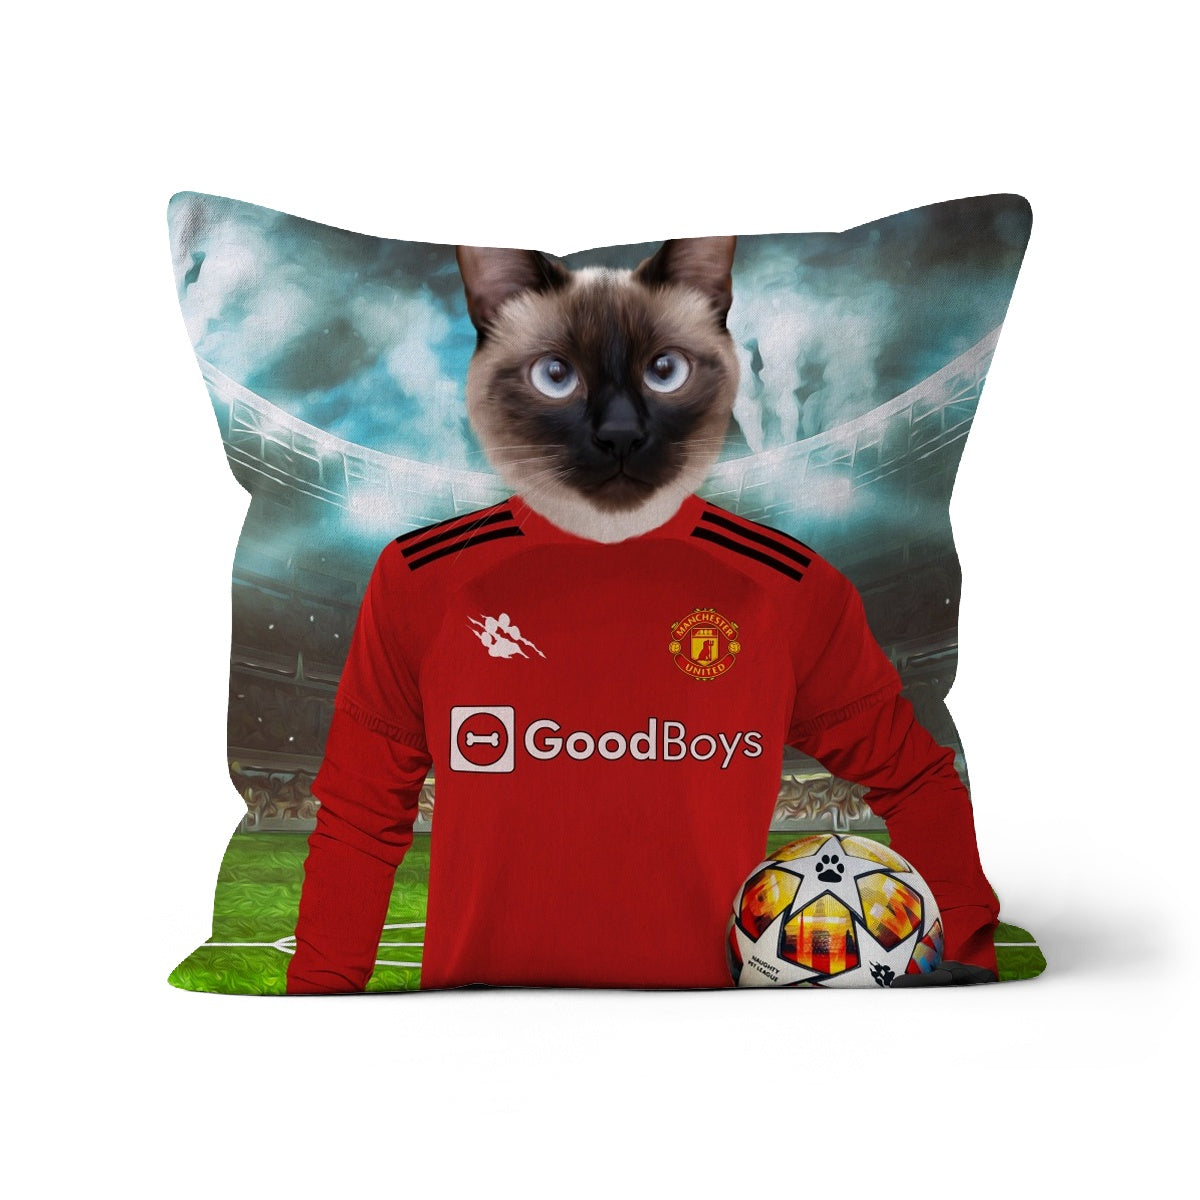 Pawchester United Football Club: Custom Pet Pillow